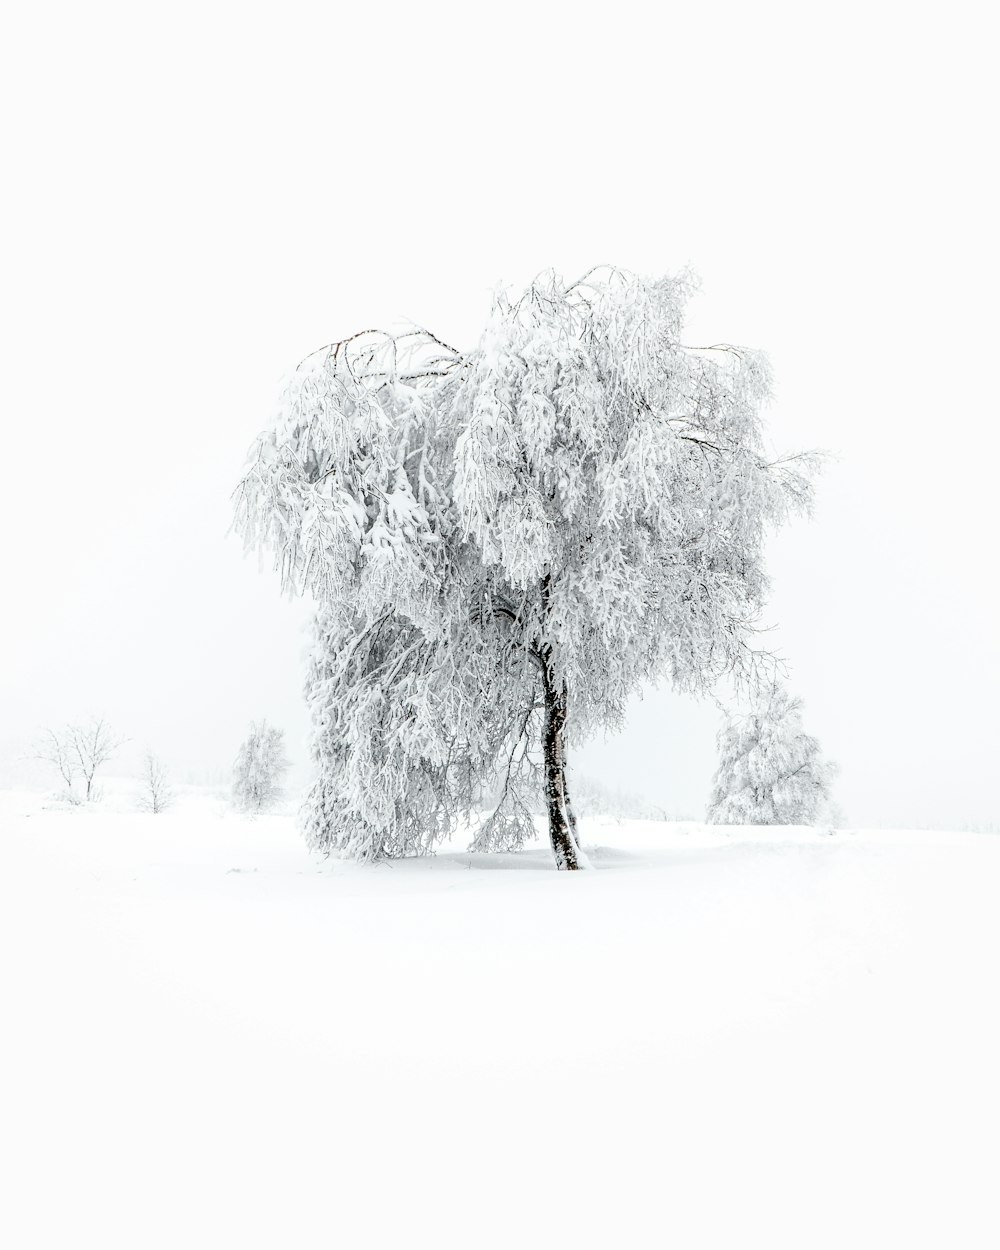 black tree on snow covered ground